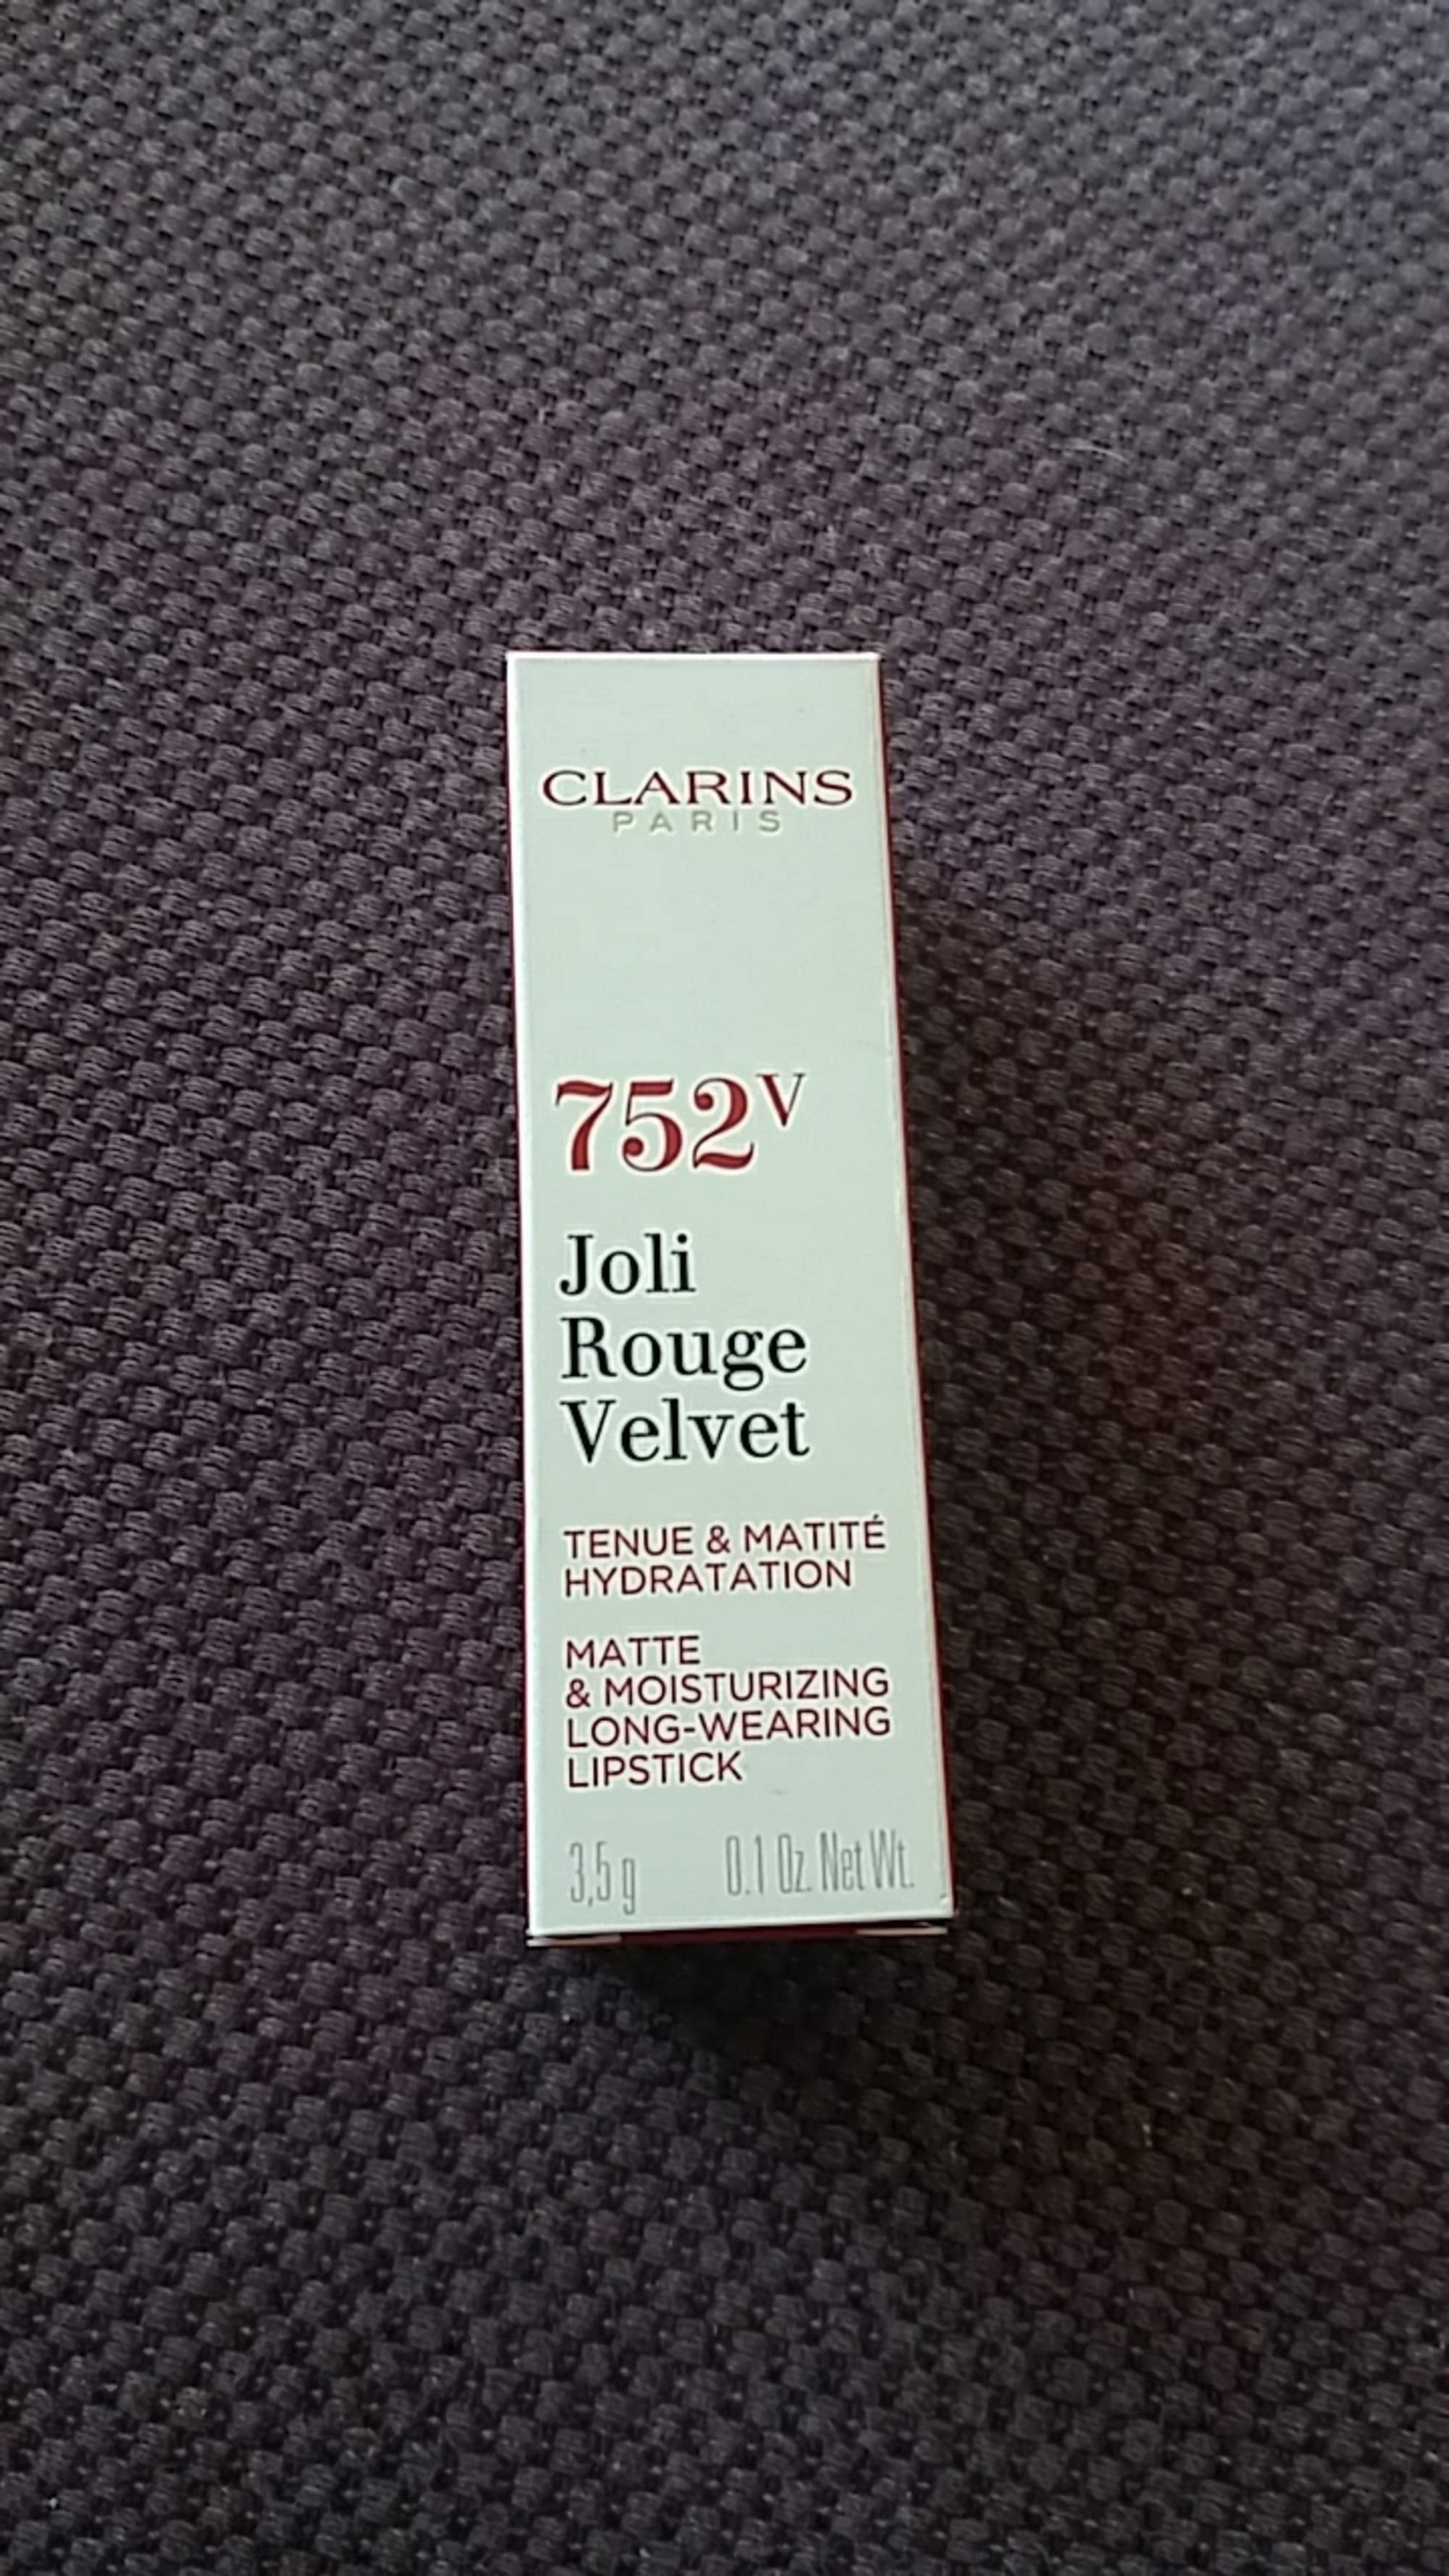 CLARINS - Joli rouge velvet 752v - Tenue & matité hydratation